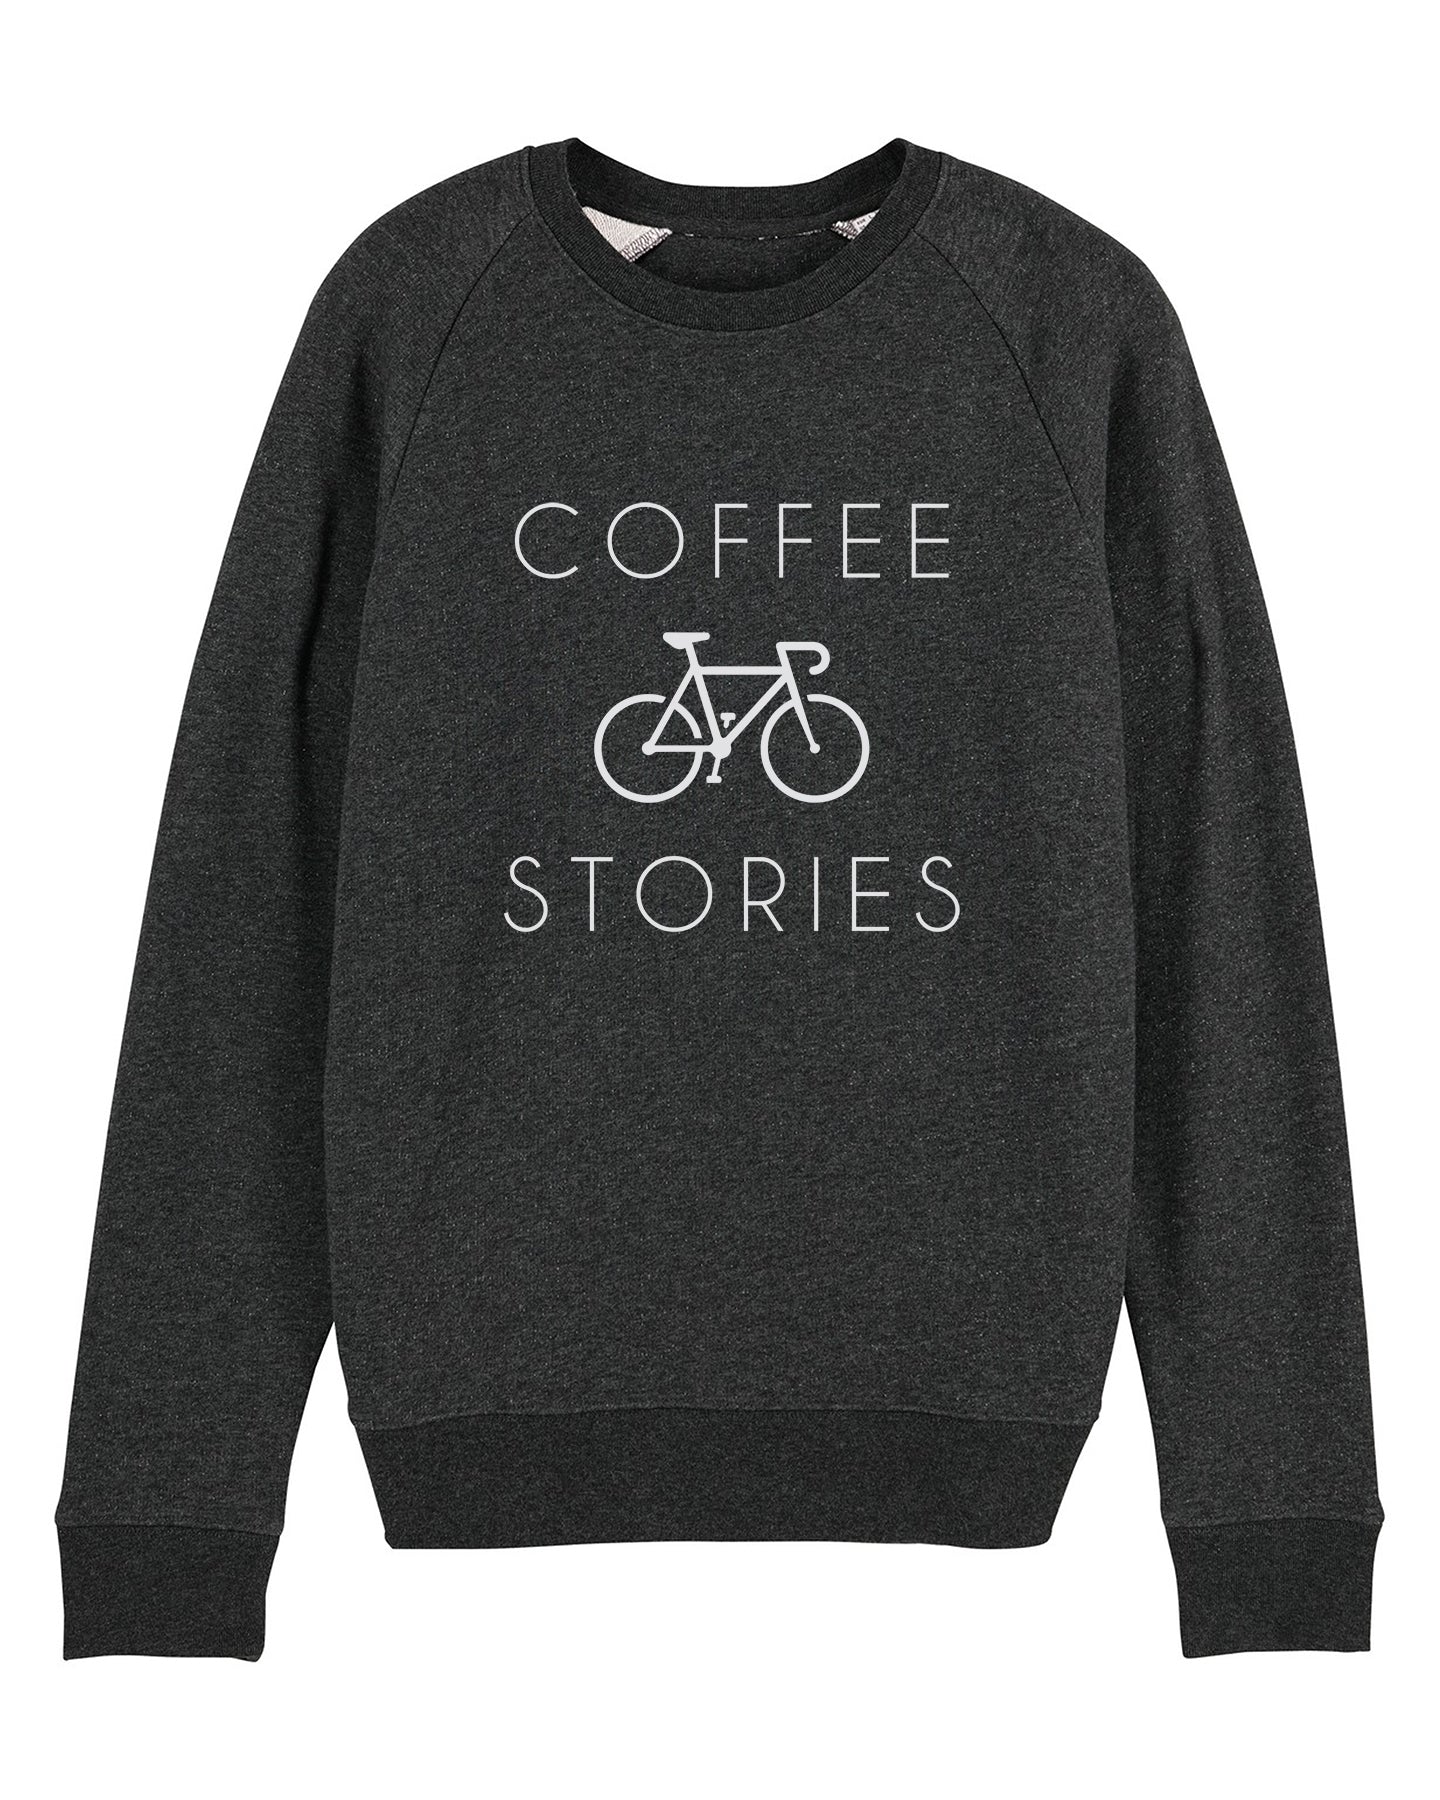 Coffee - Bike - Stories Women Sweater